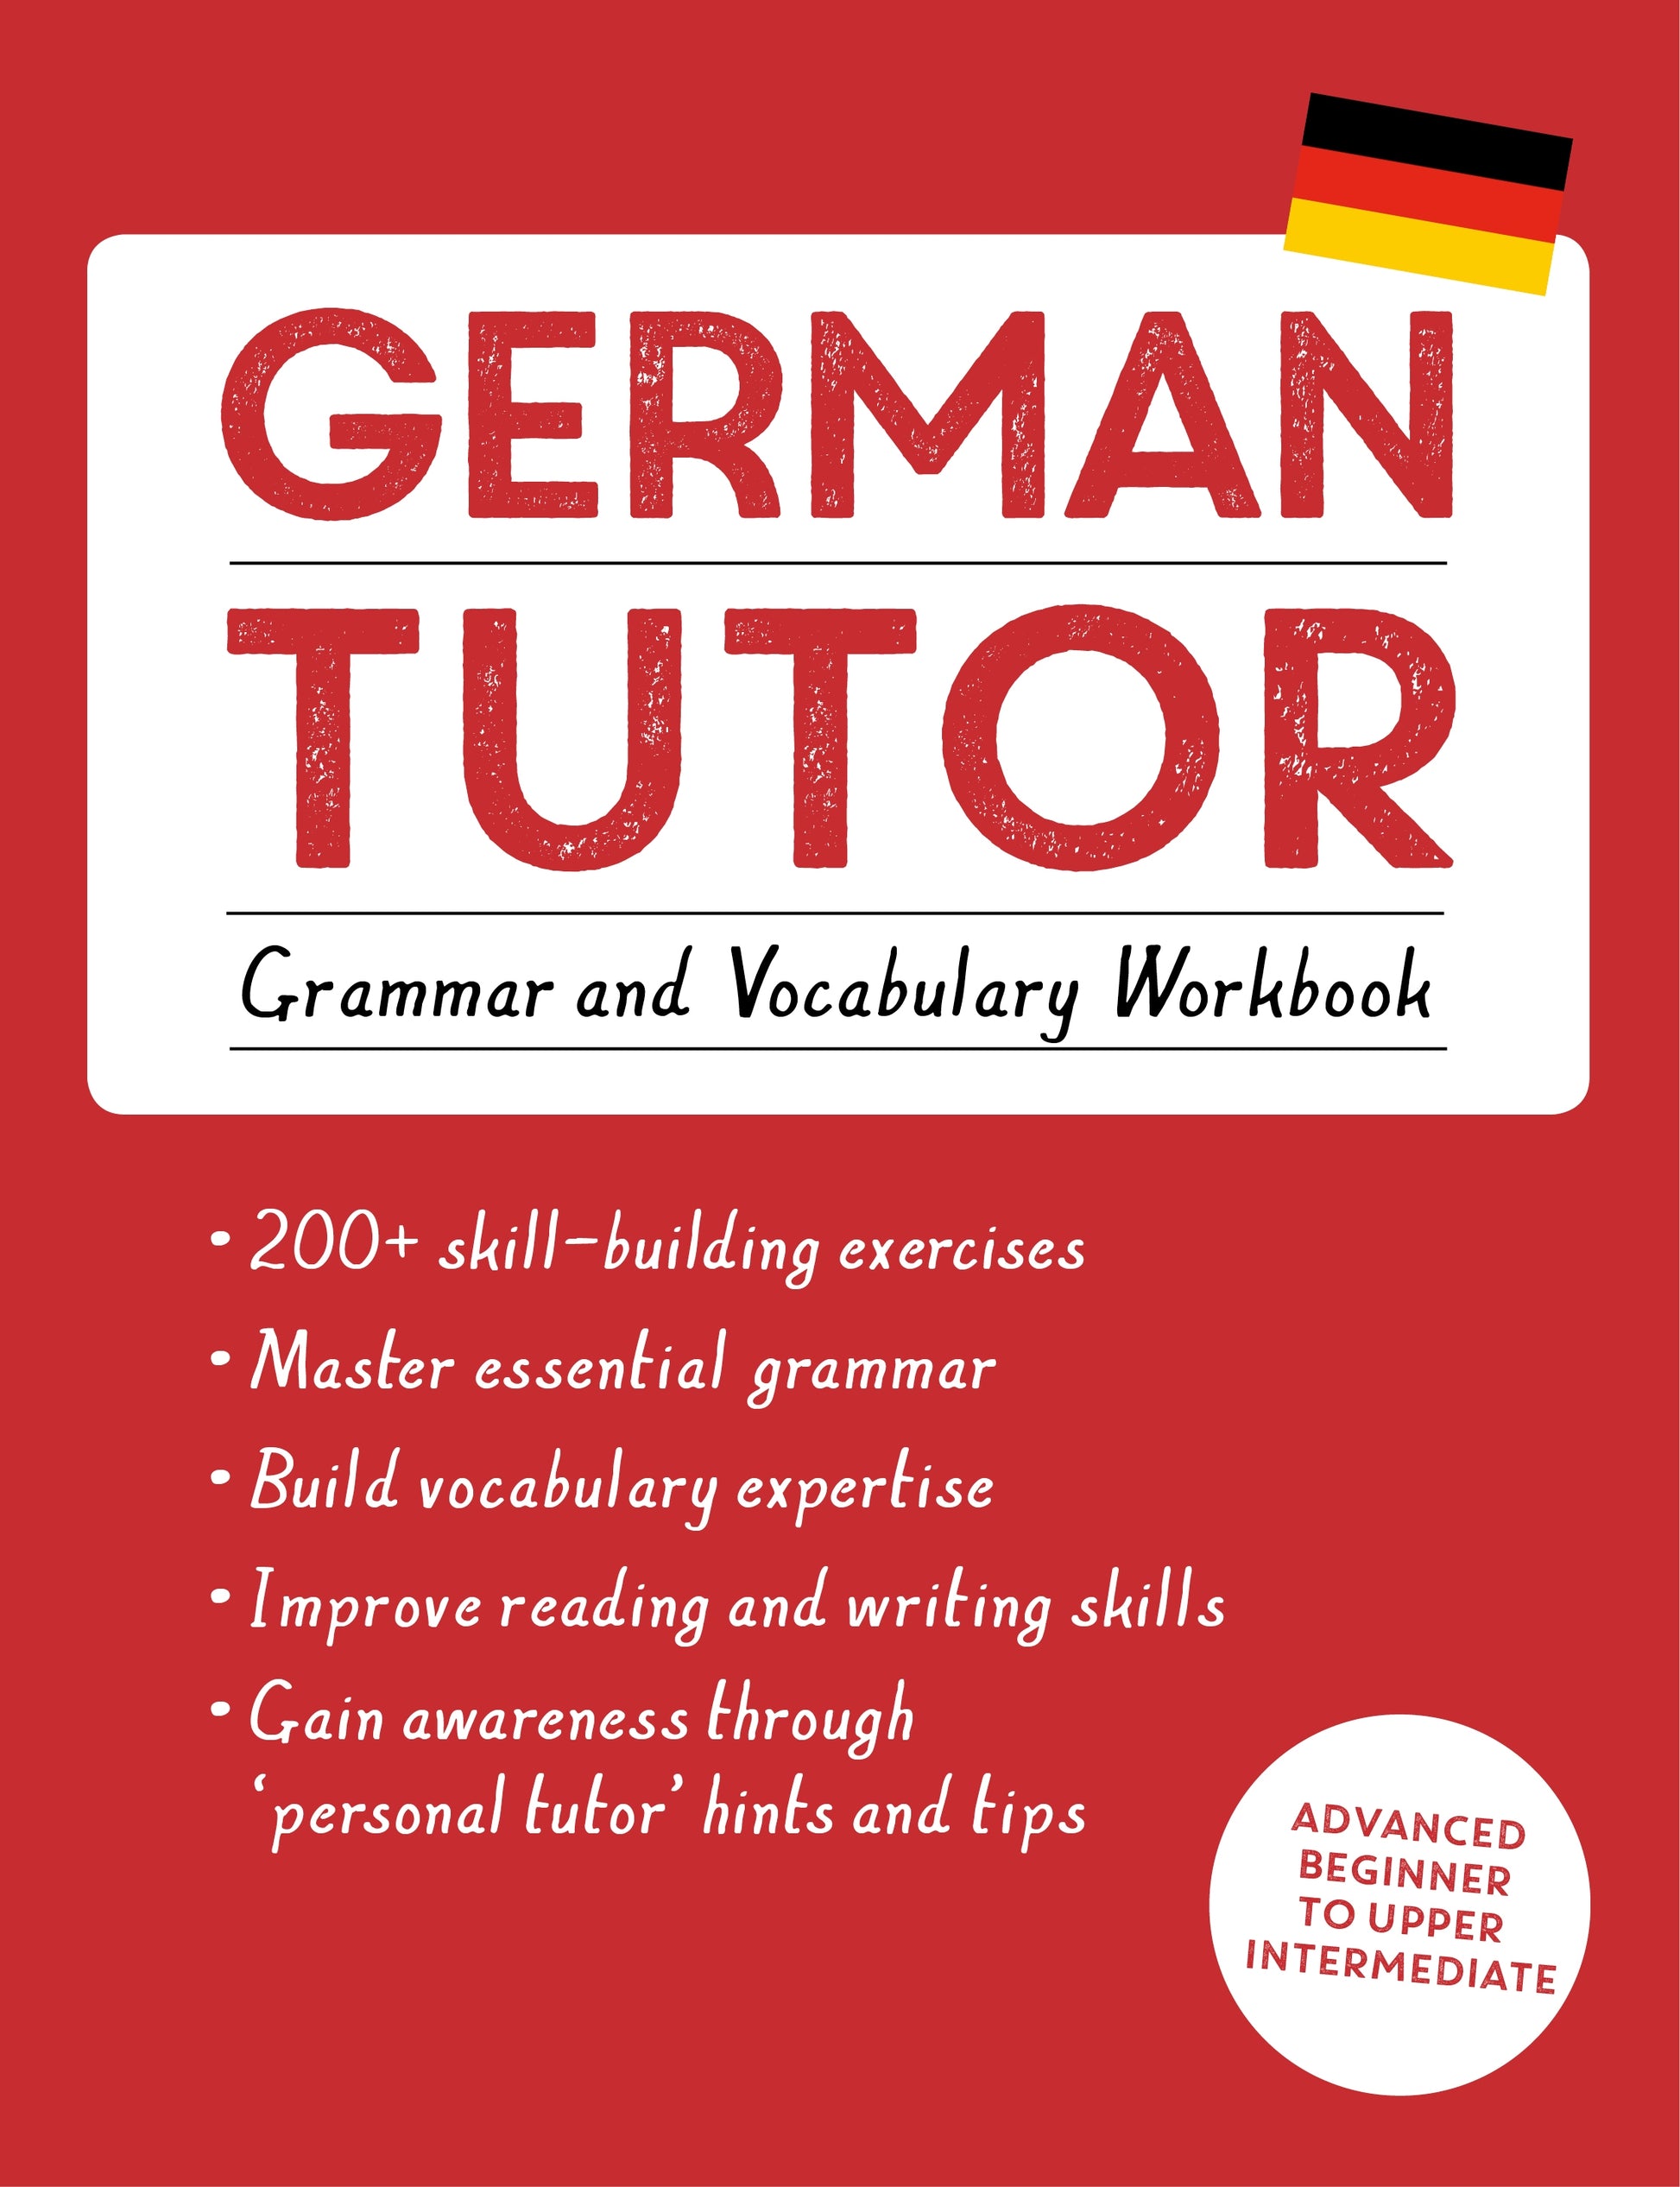 German Tutor: Grammar and Vocabulary Workbook (Learn German with Teach Yourself) by Edith Kreutner, Jonas Langner